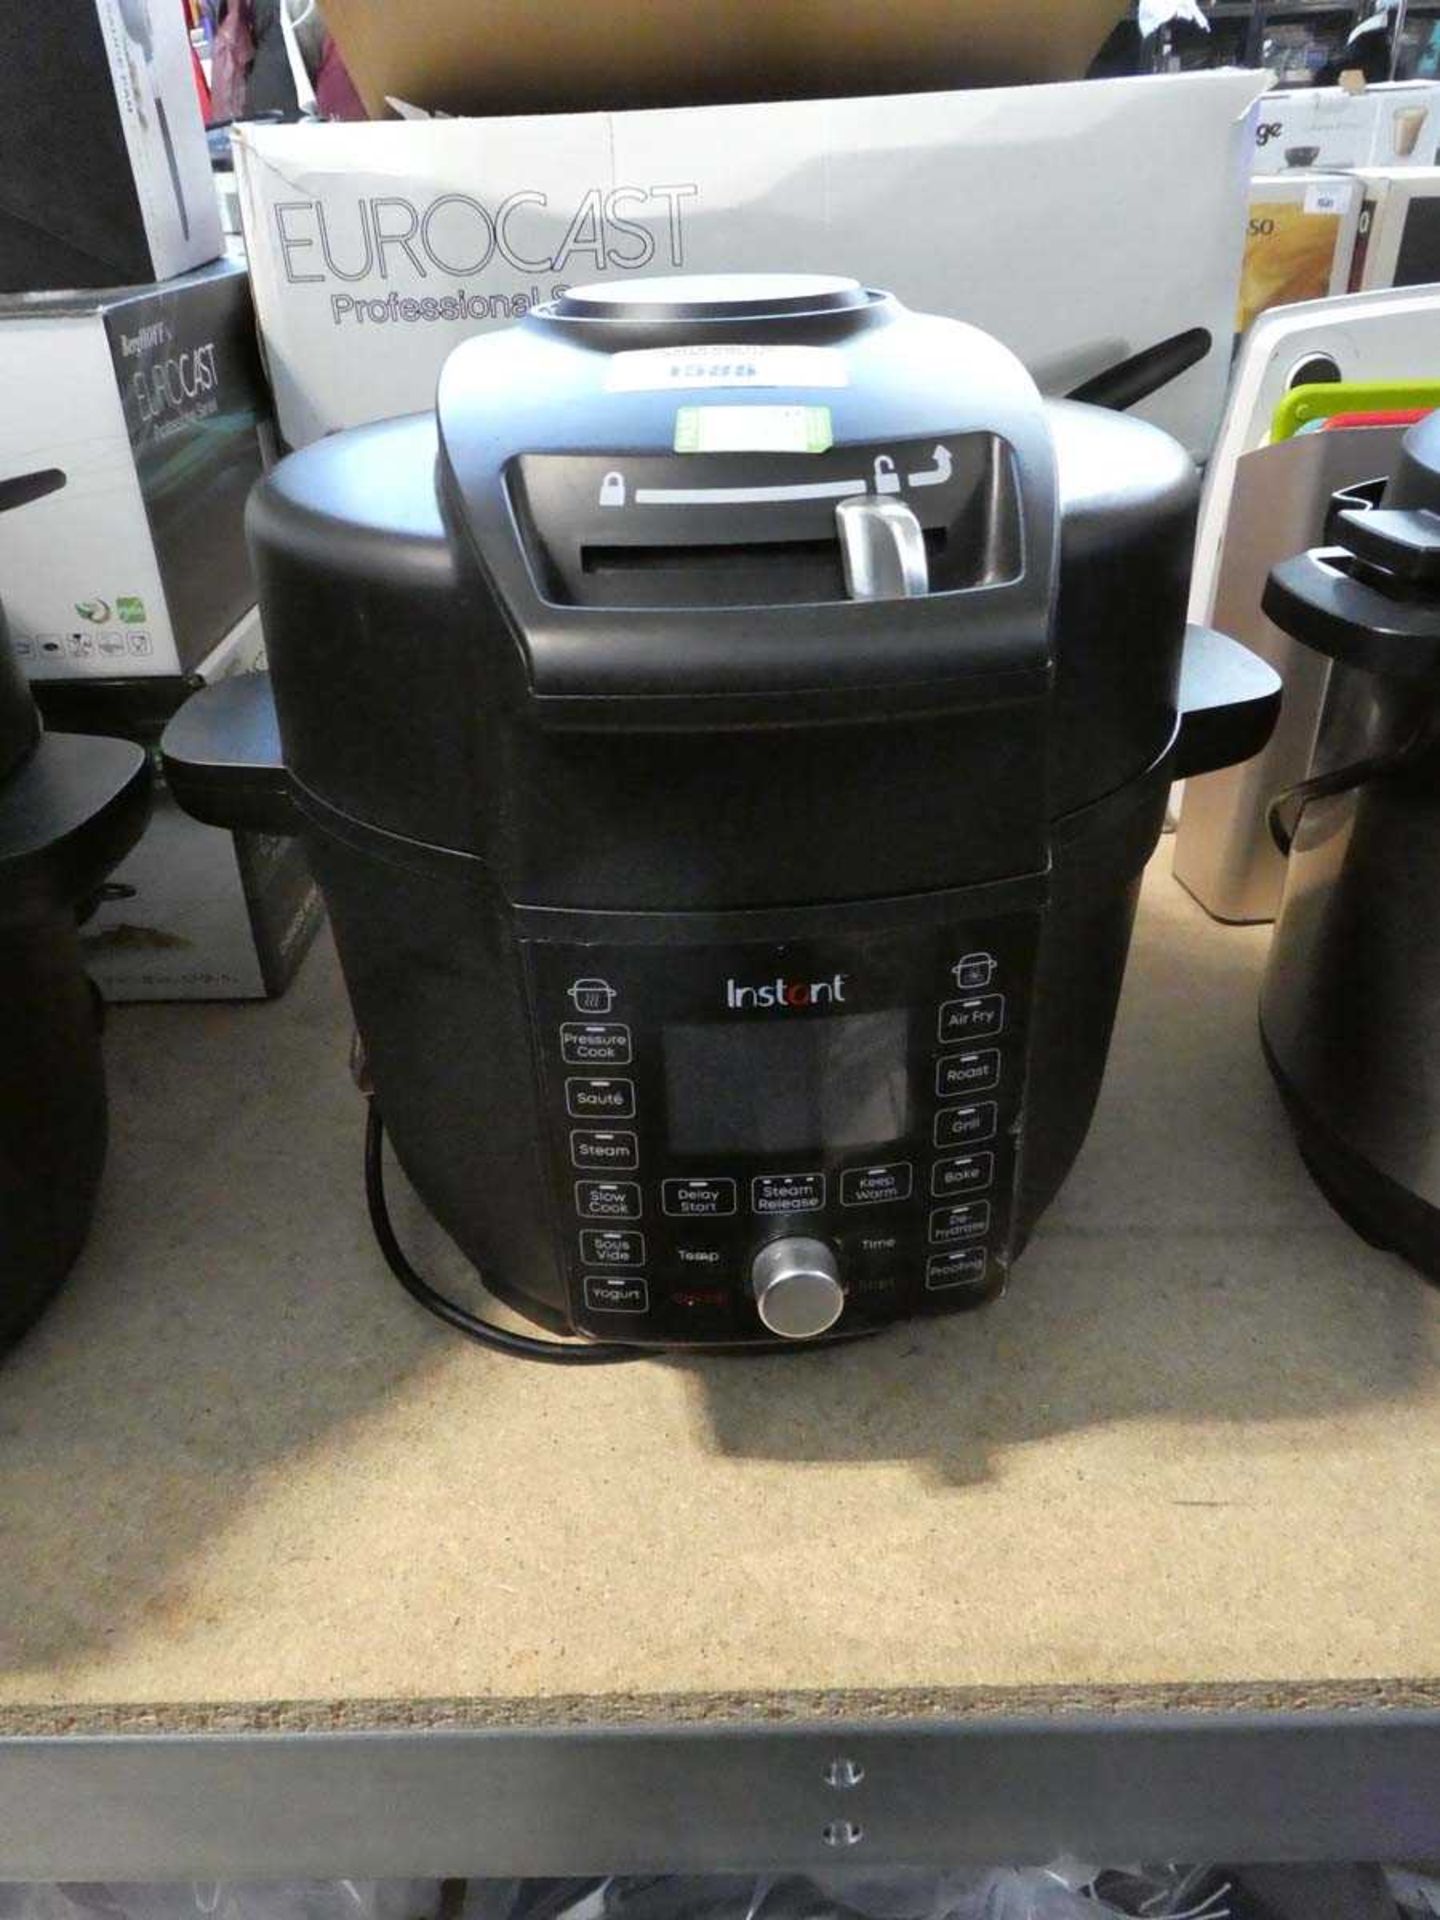 +VAT Instant Pot pressure cooker and air fryer, unboxed